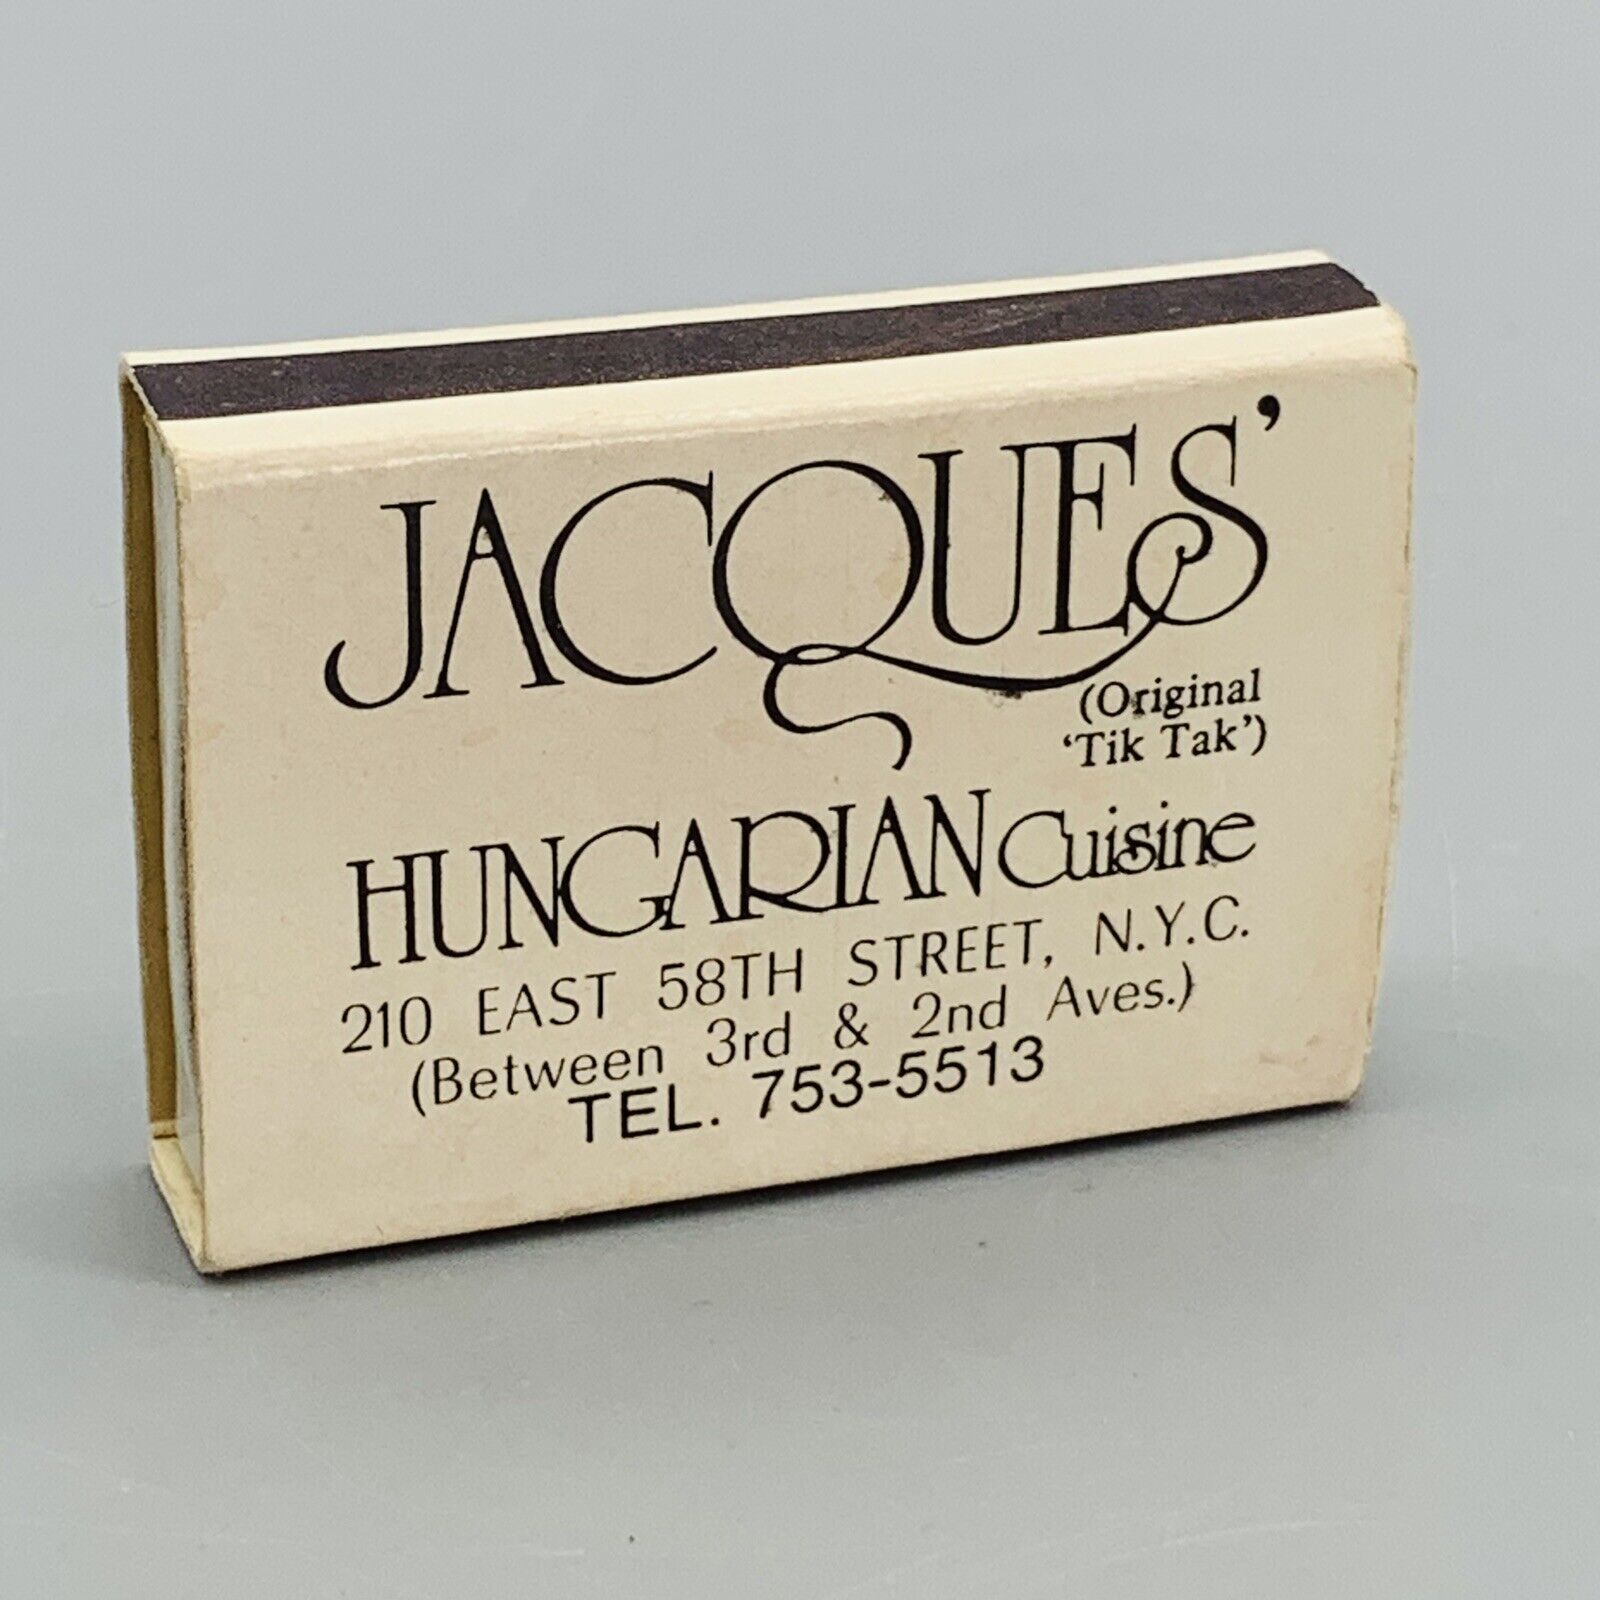 VTG Jacques' Hungarian Cuisine Piano Bar Original Tik Tak NYC Pocket Box Matches